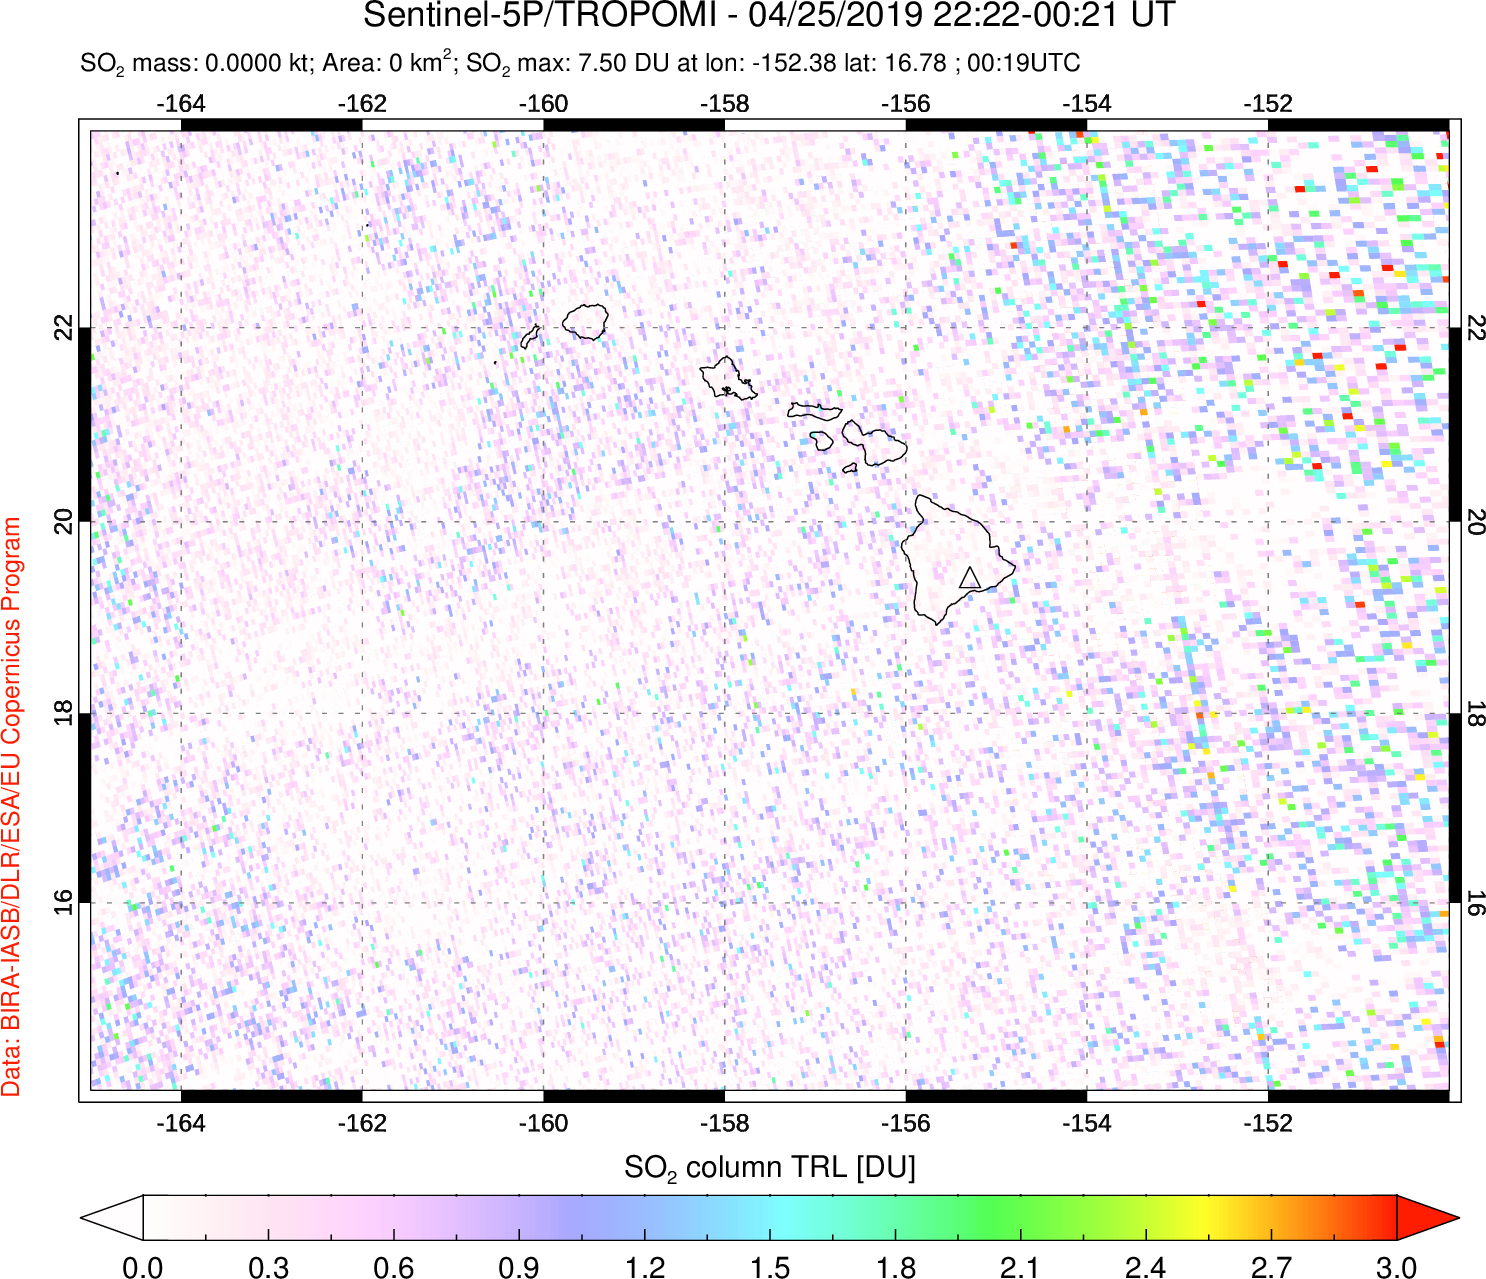 A sulfur dioxide image over Hawaii, USA on Apr 25, 2019.